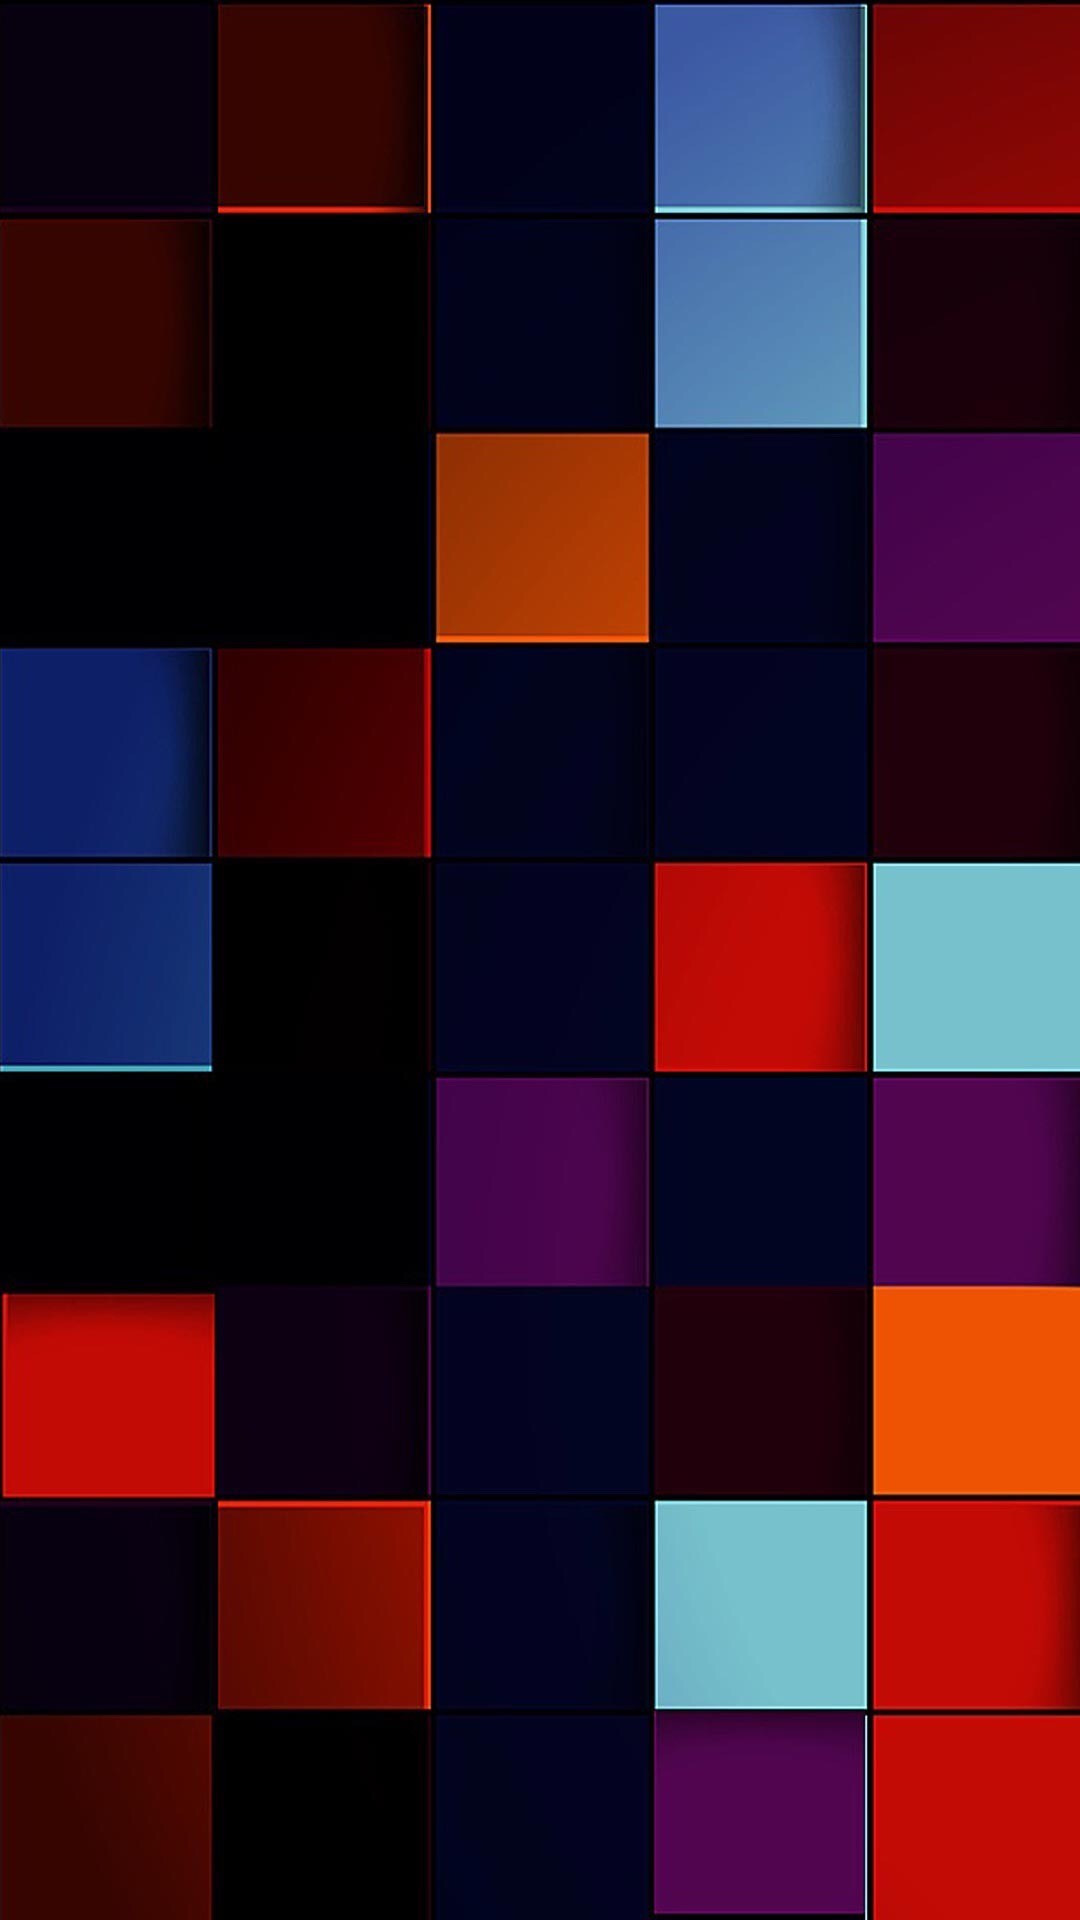 Colorful Geometric Shapes Wallpaper